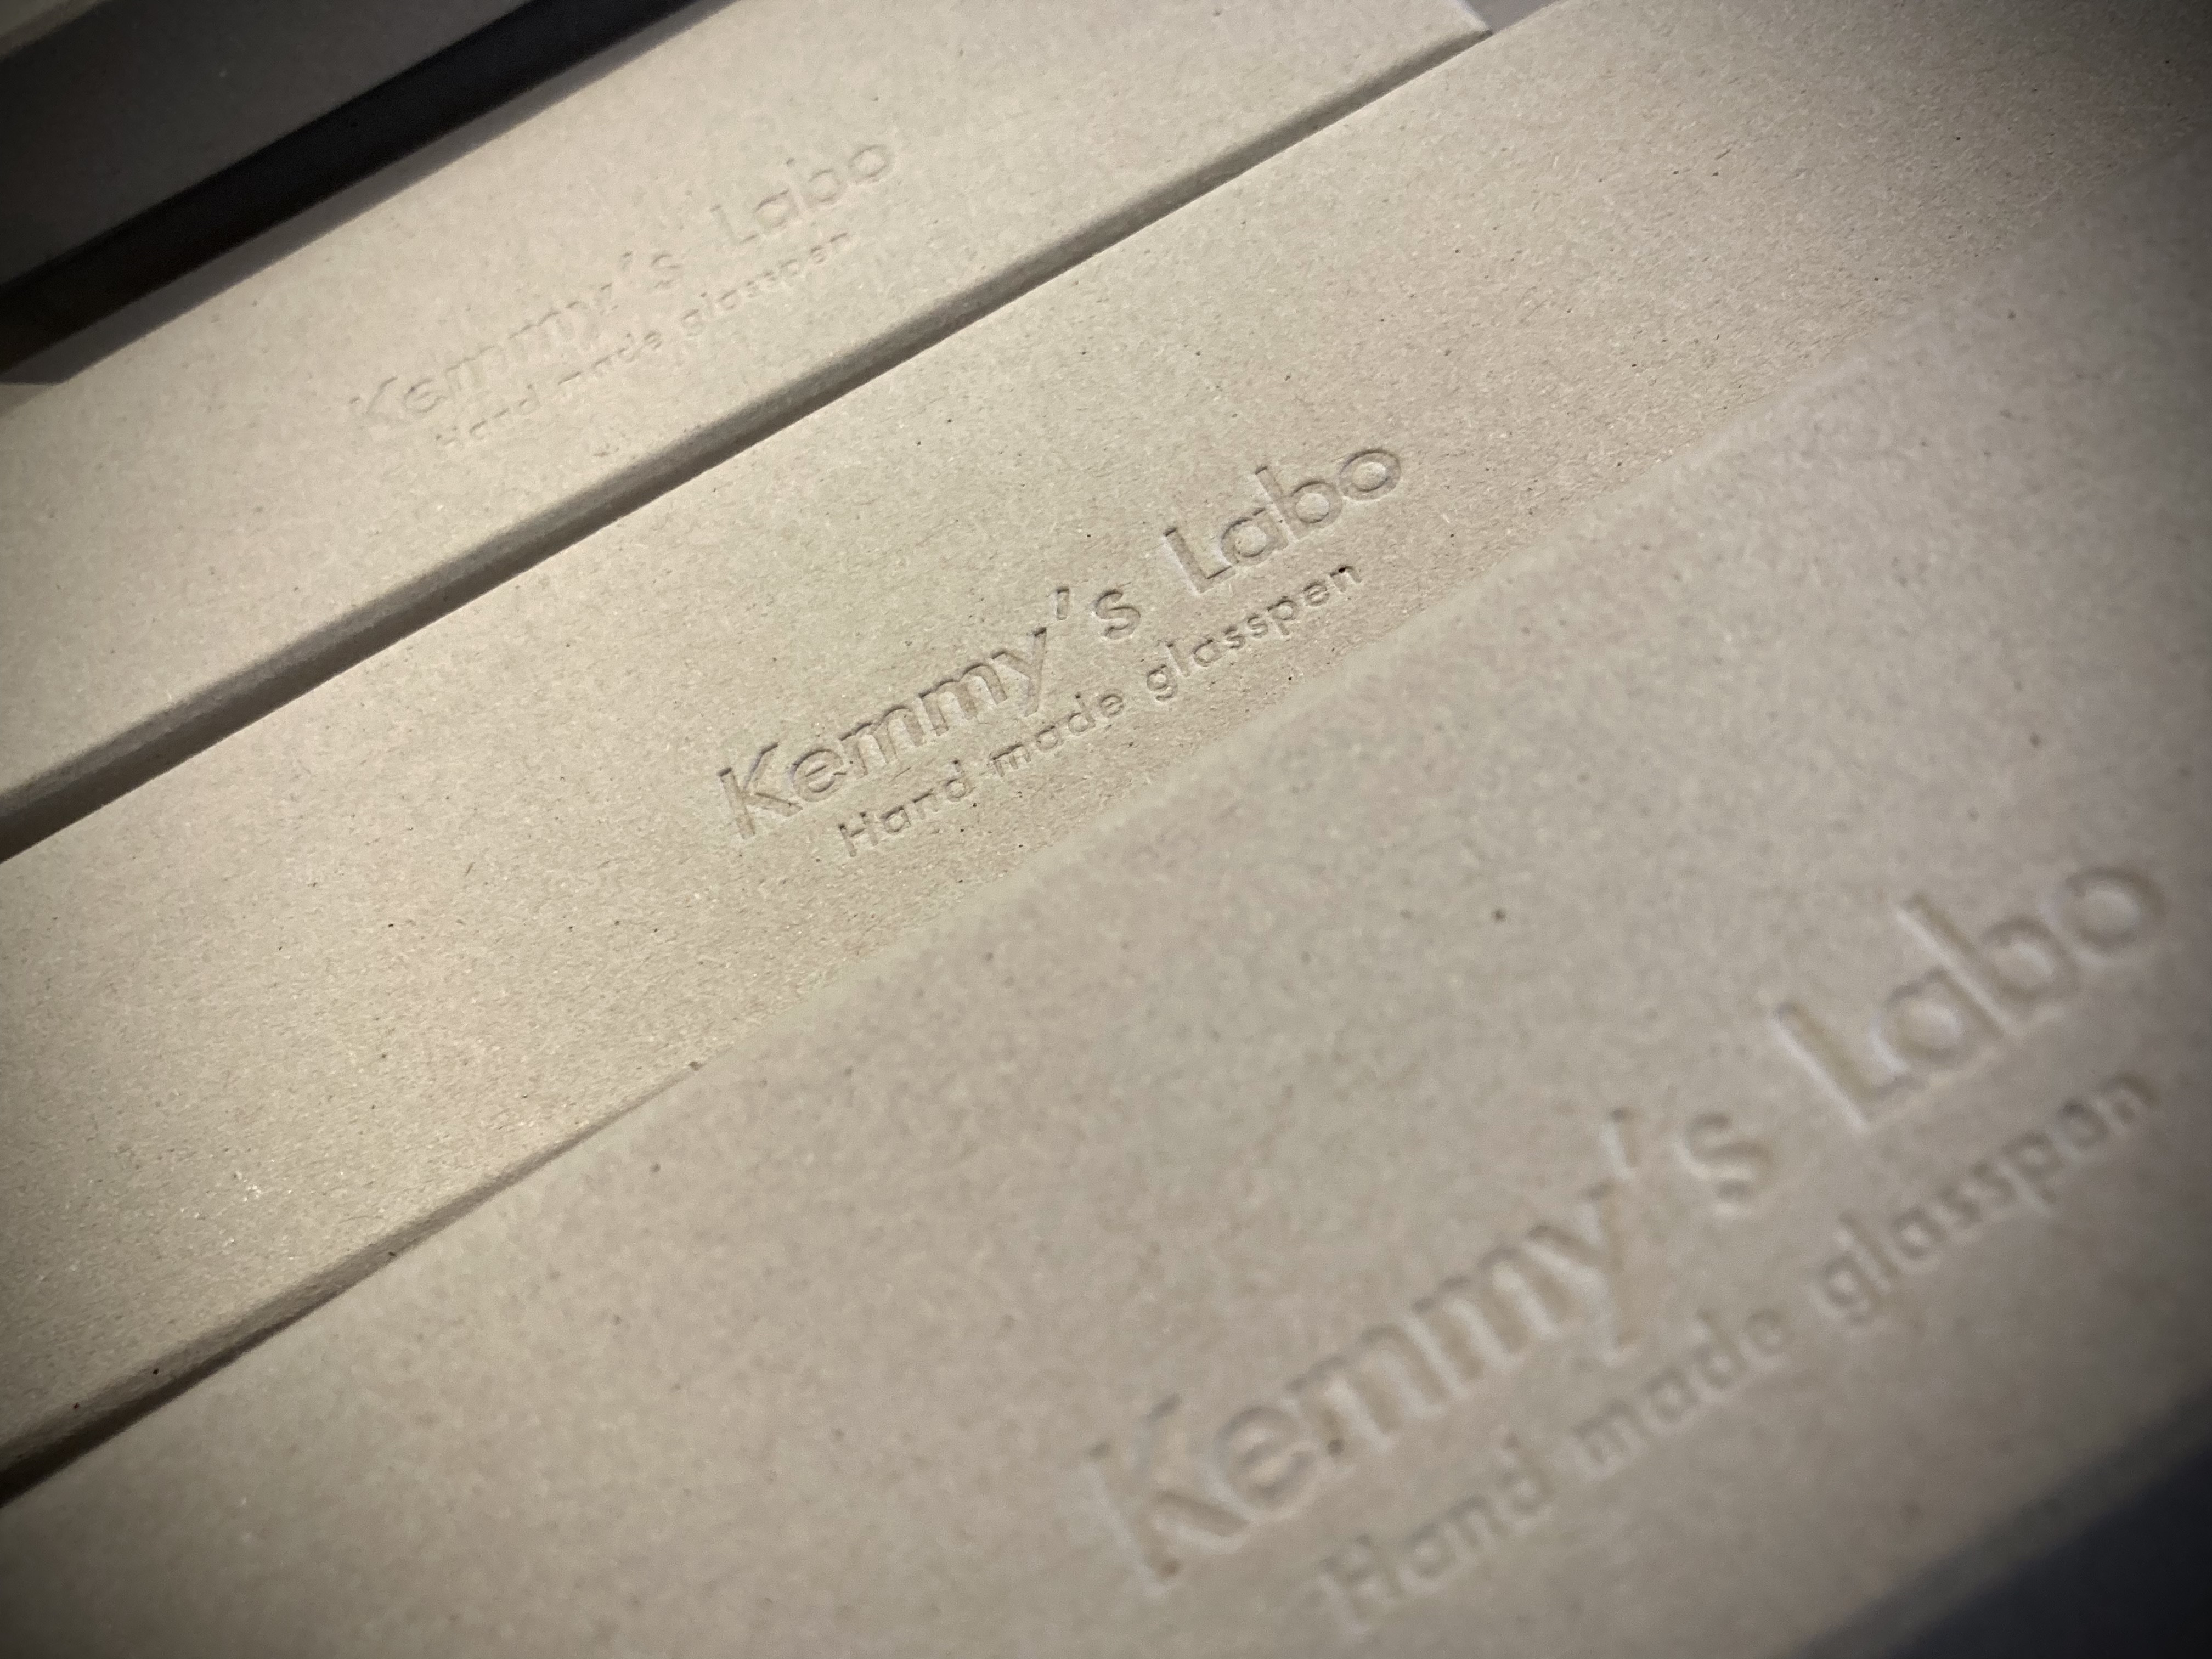 Kemmy‘s Laboガラスペンが入荷、数量わずか。